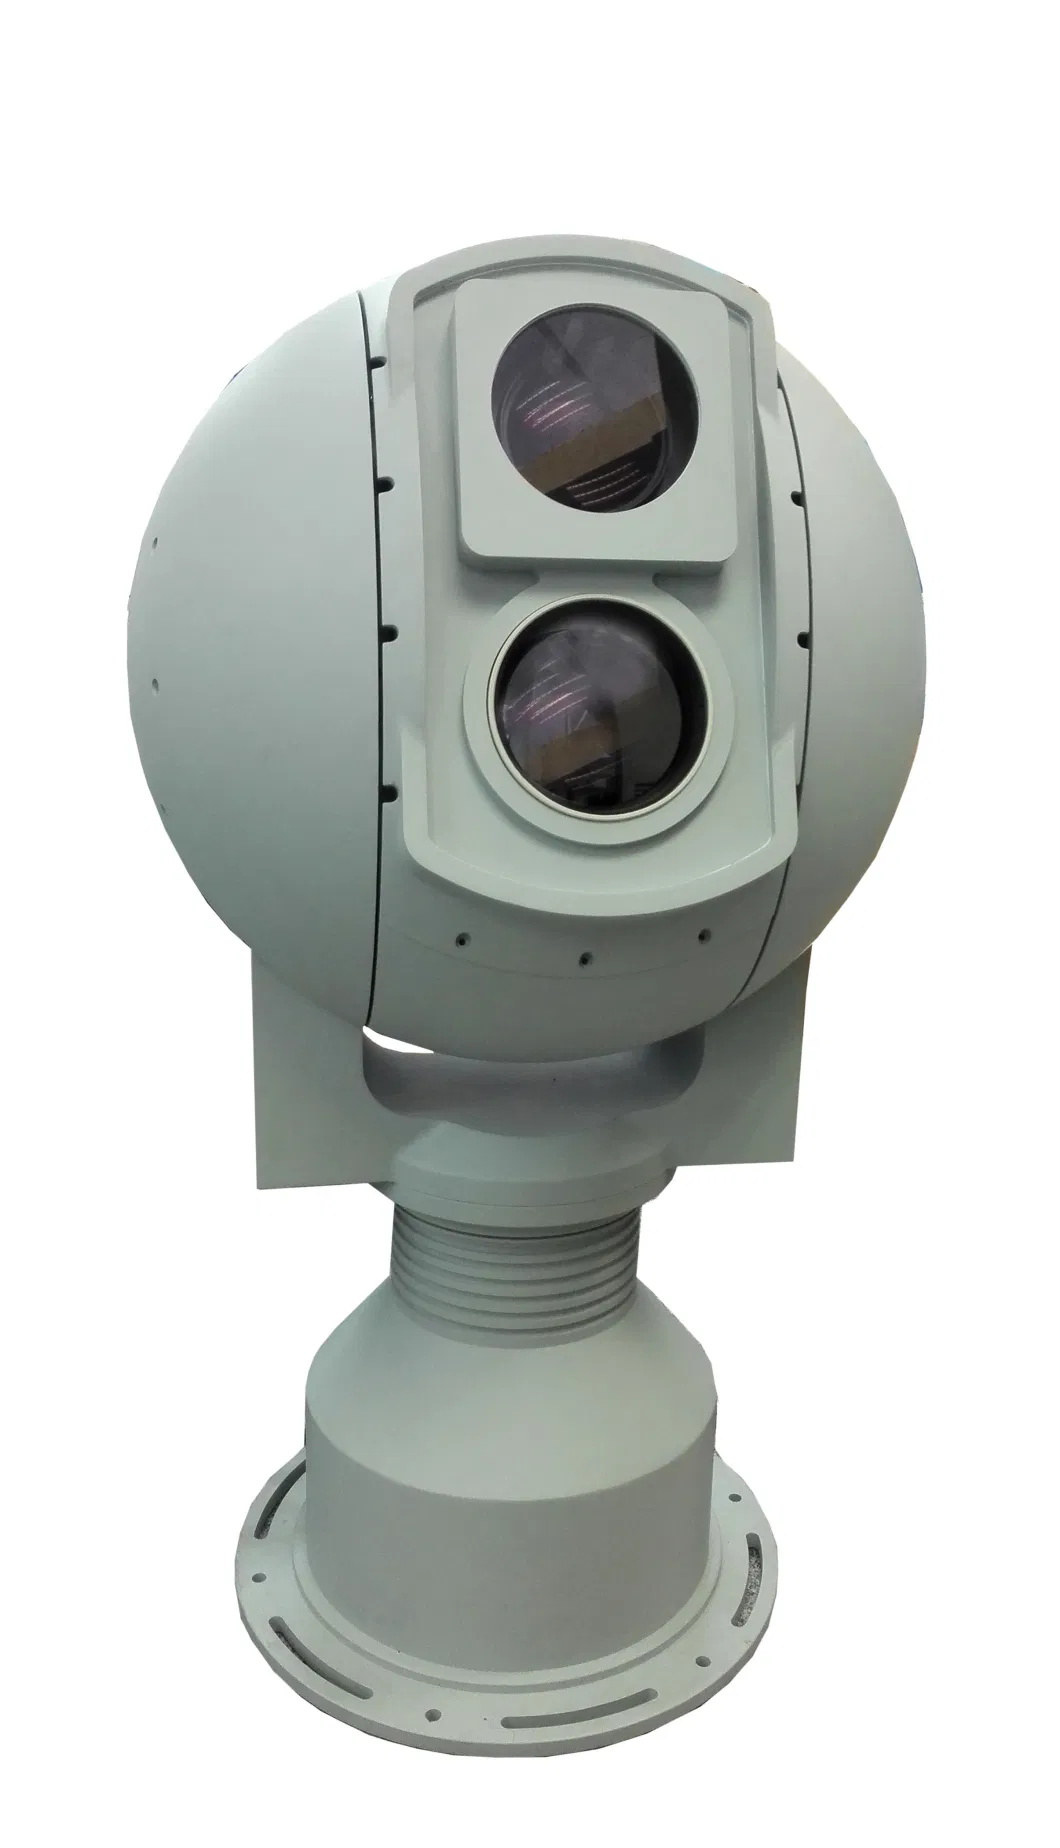 Jh320-150/75 Intelligent Electro Optical Sensor IR Camera and Daylight Camera System